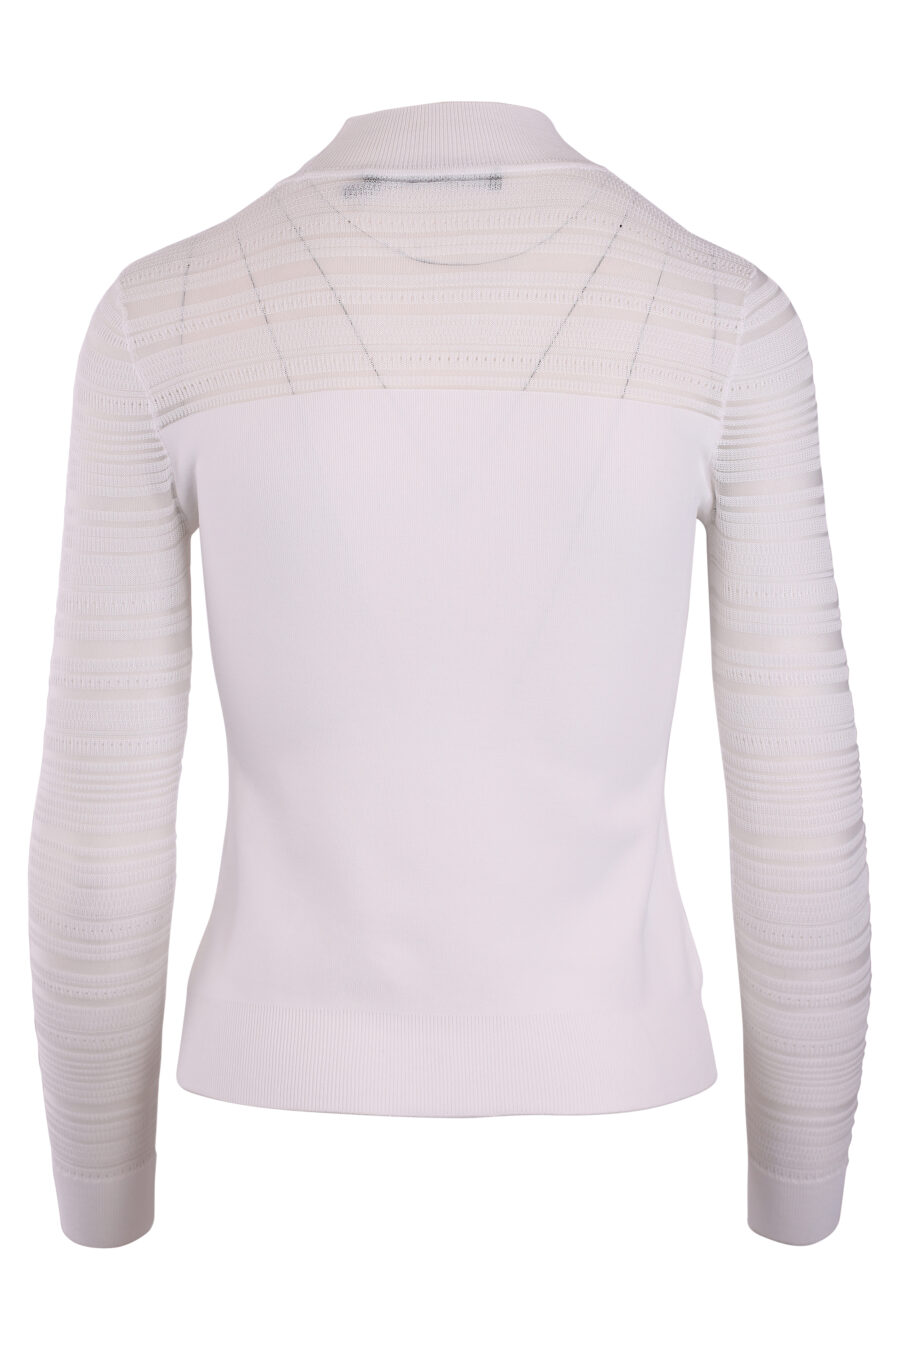 T-shirt blanc semi-transparent à manches longues - IMG 3262